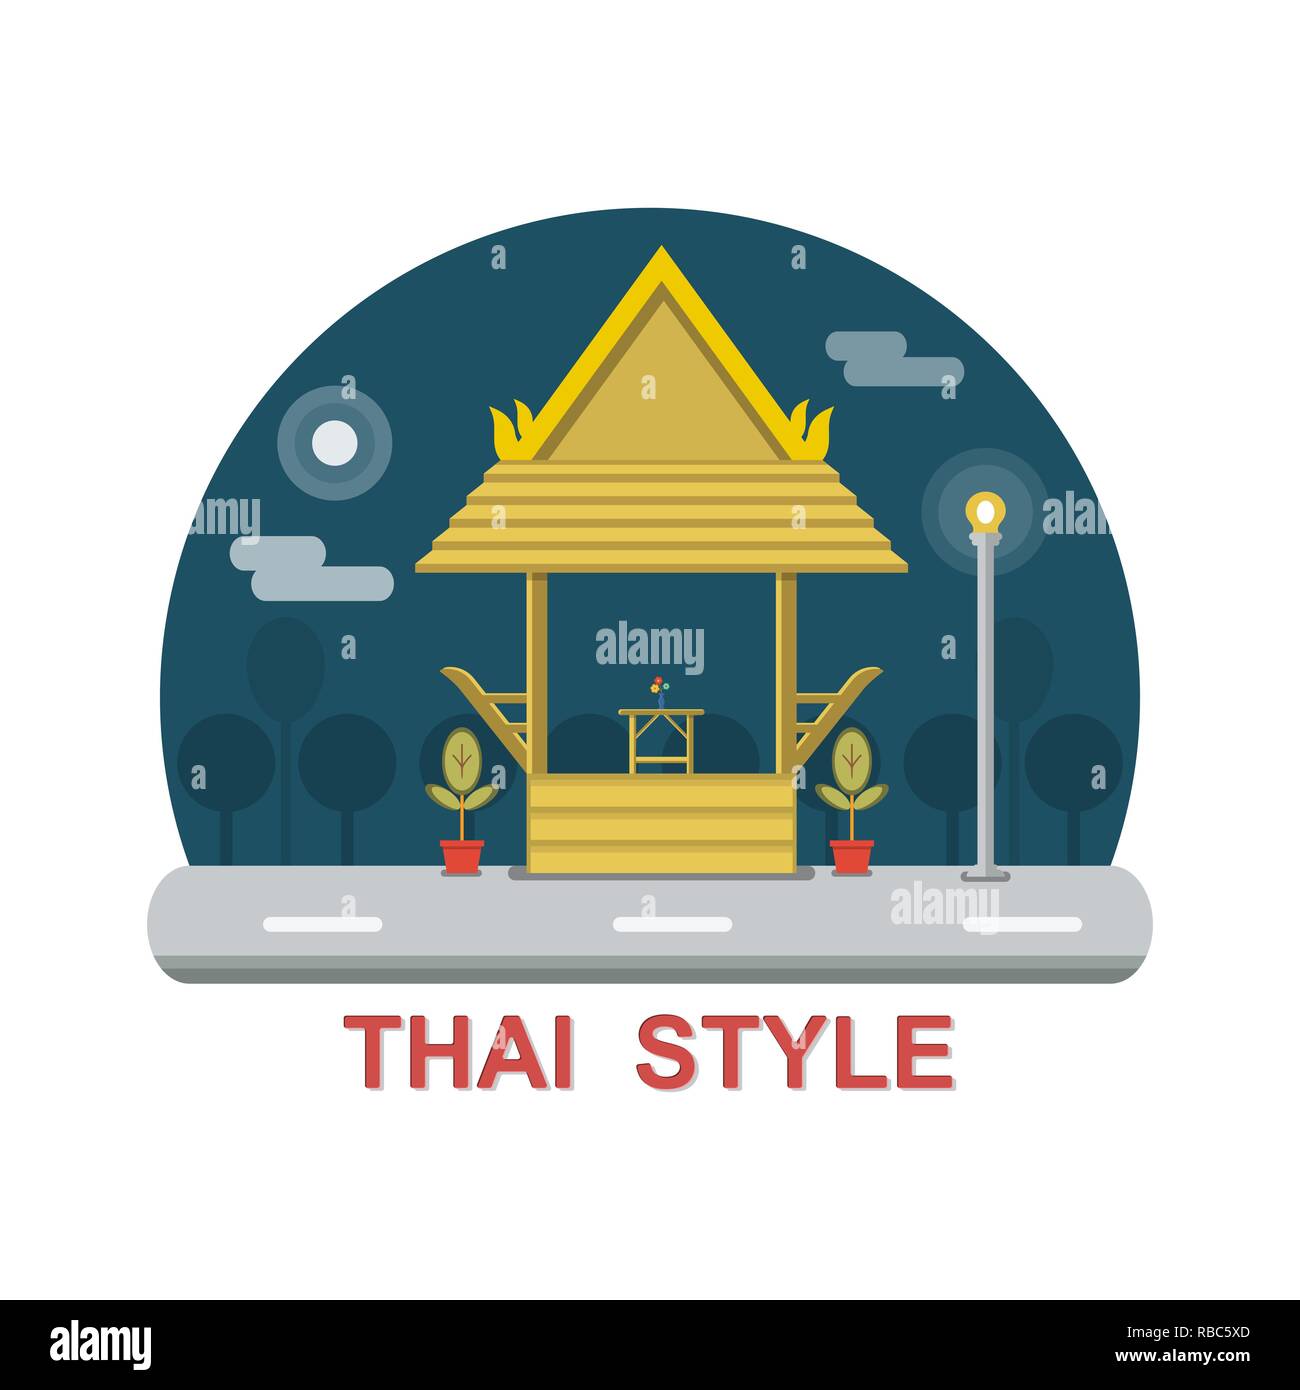 Rest area thai style vector illustration Stock Vector